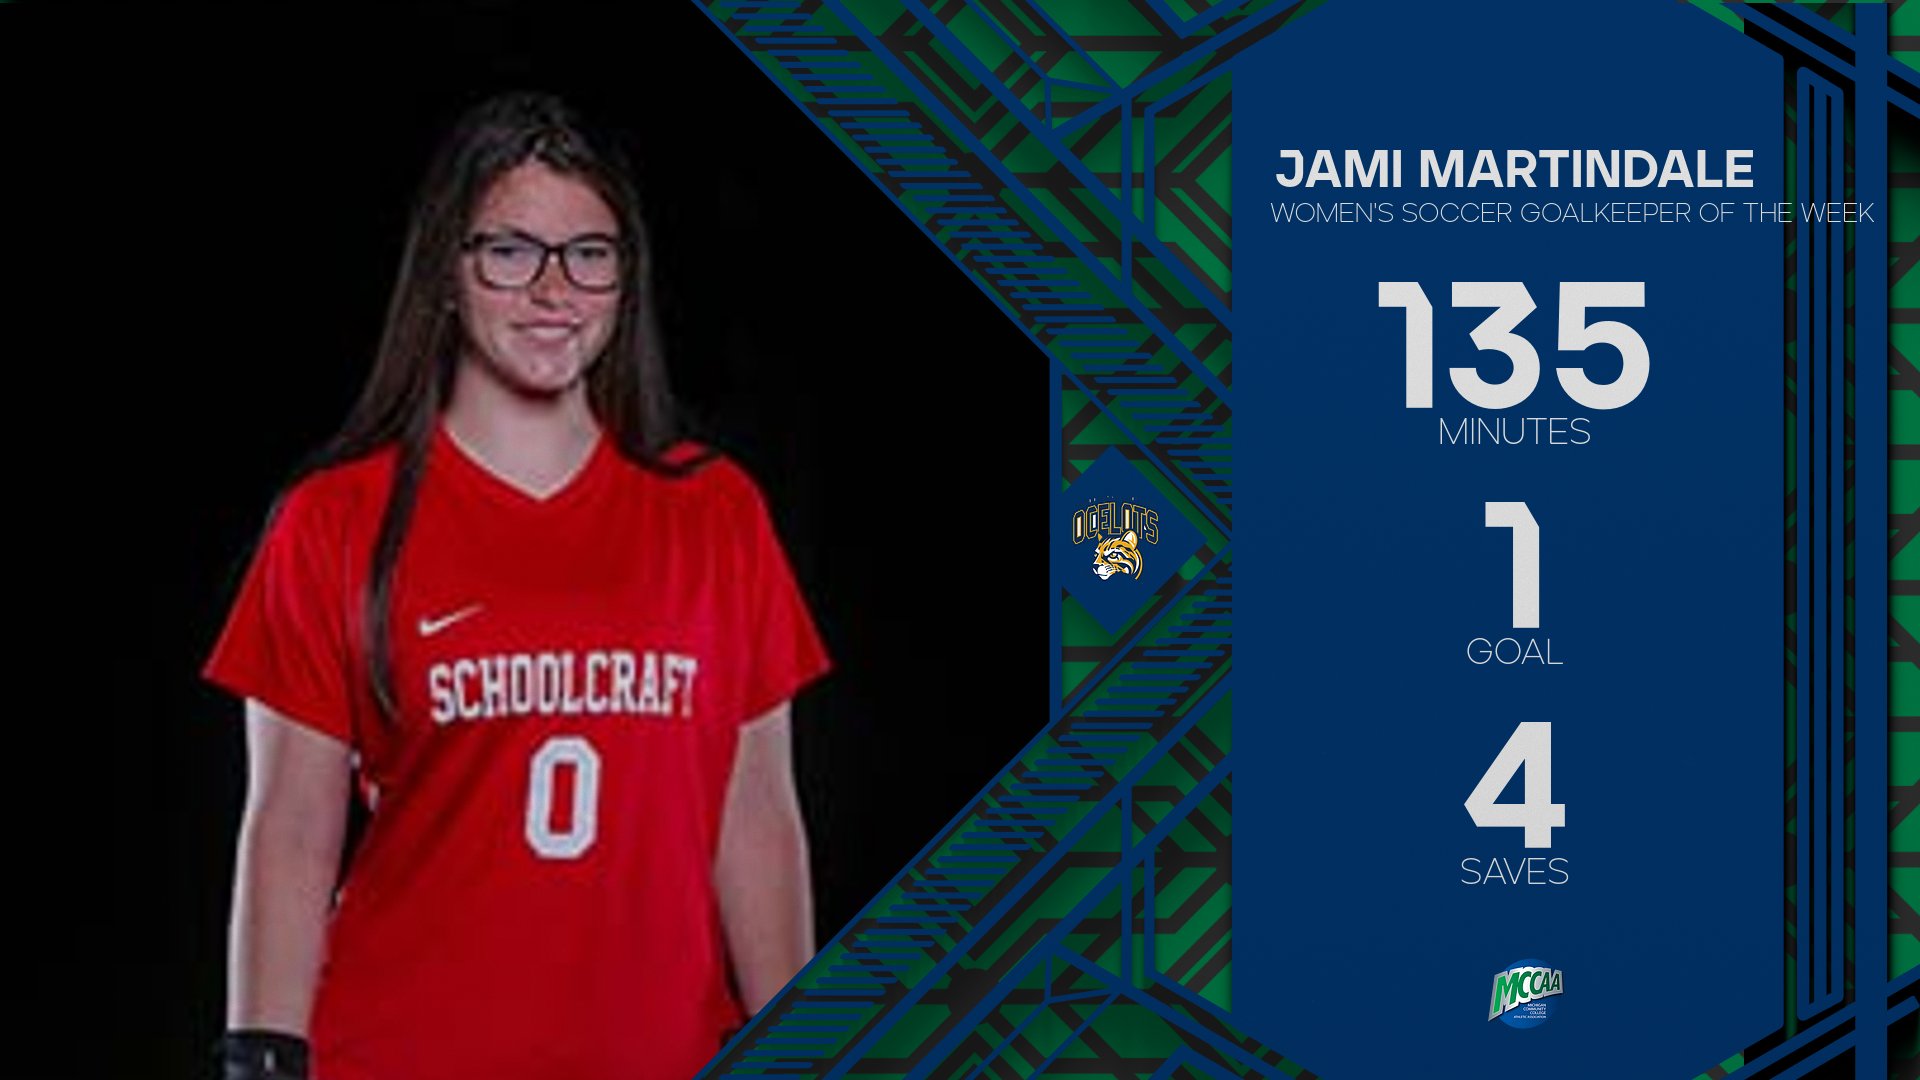 Jami Martindale, MCCAA Women's Soccer Goalkeeper of the Week, Schoolcraft College